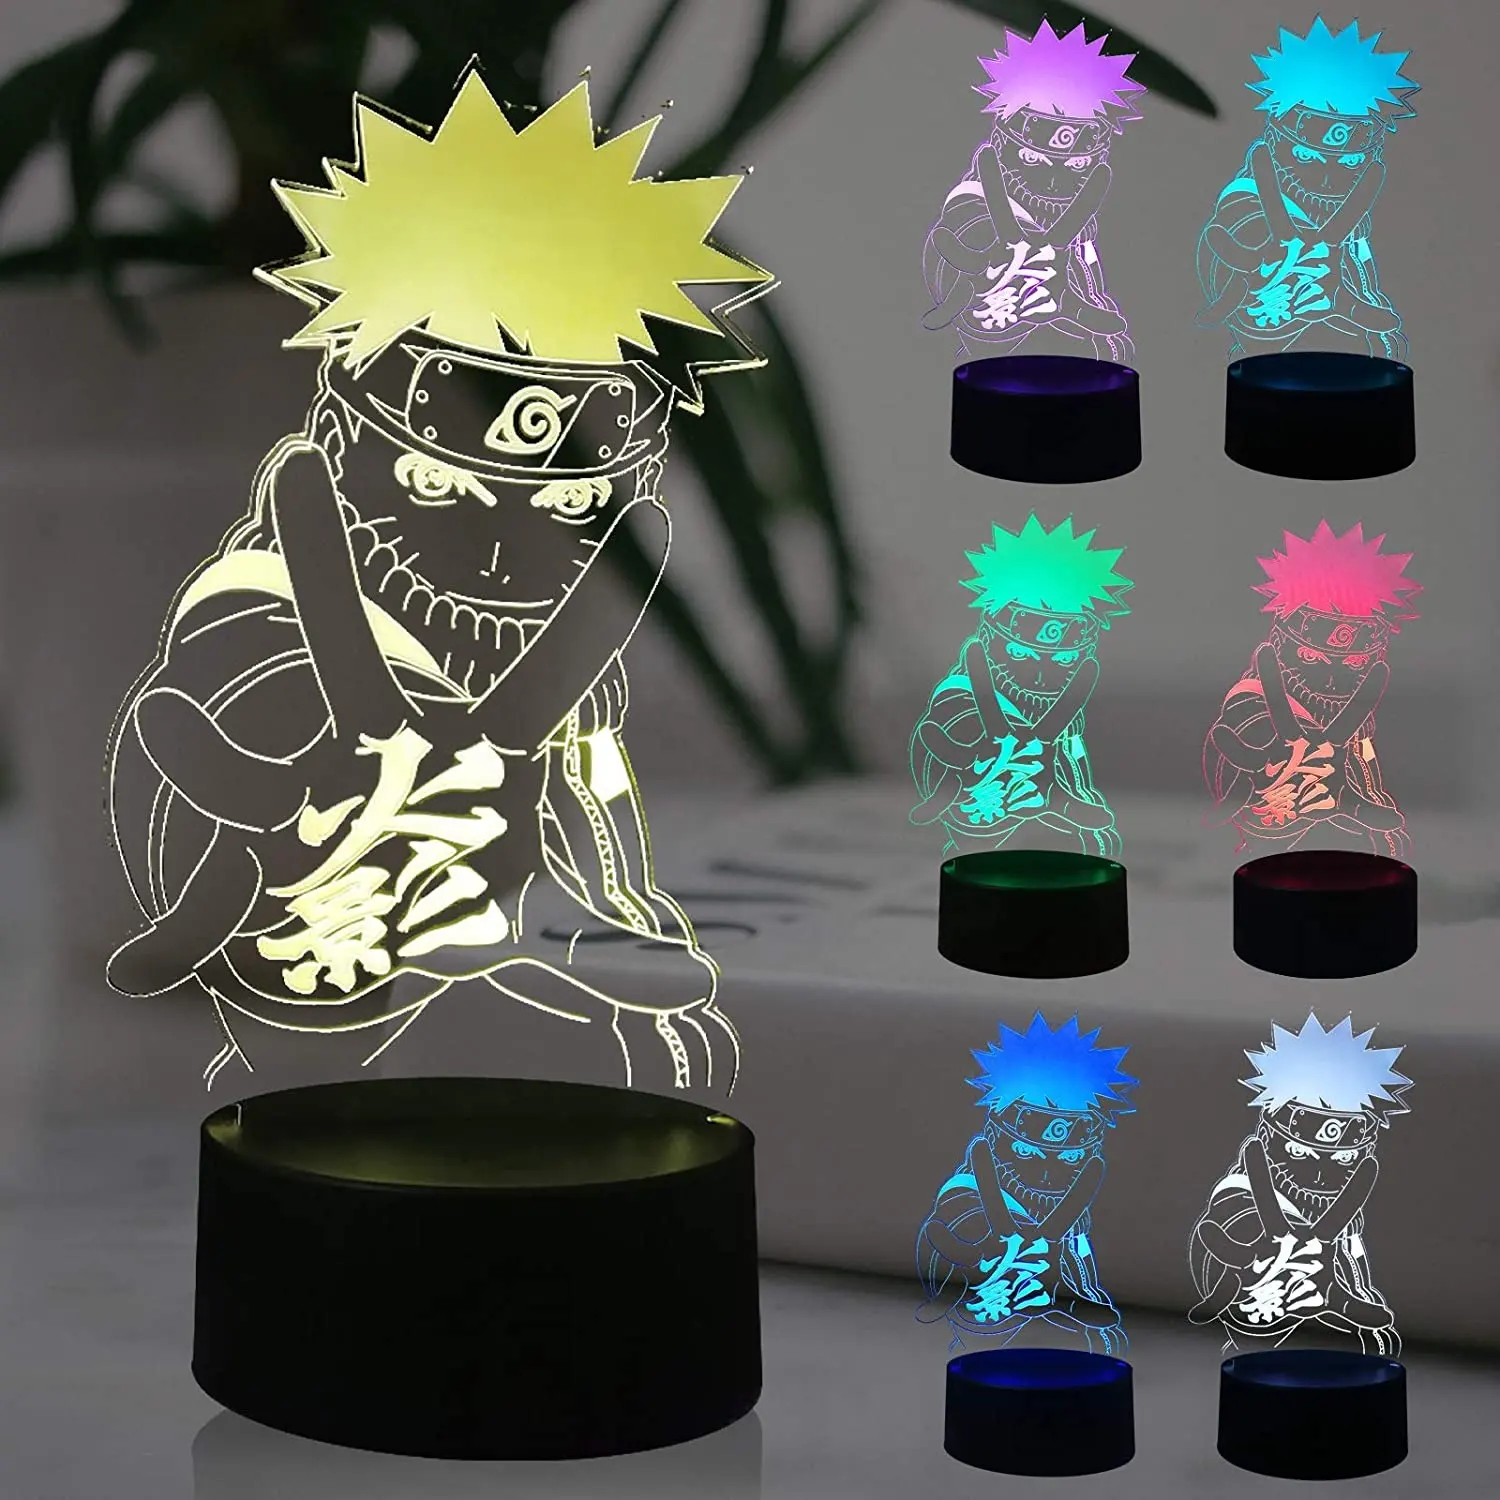 Amazon Hot Selling Anime Figure Uzumaki Night Light for Boys Bedroom, 7 Colors USB Charging 3D LED Illusion Desk Lamp